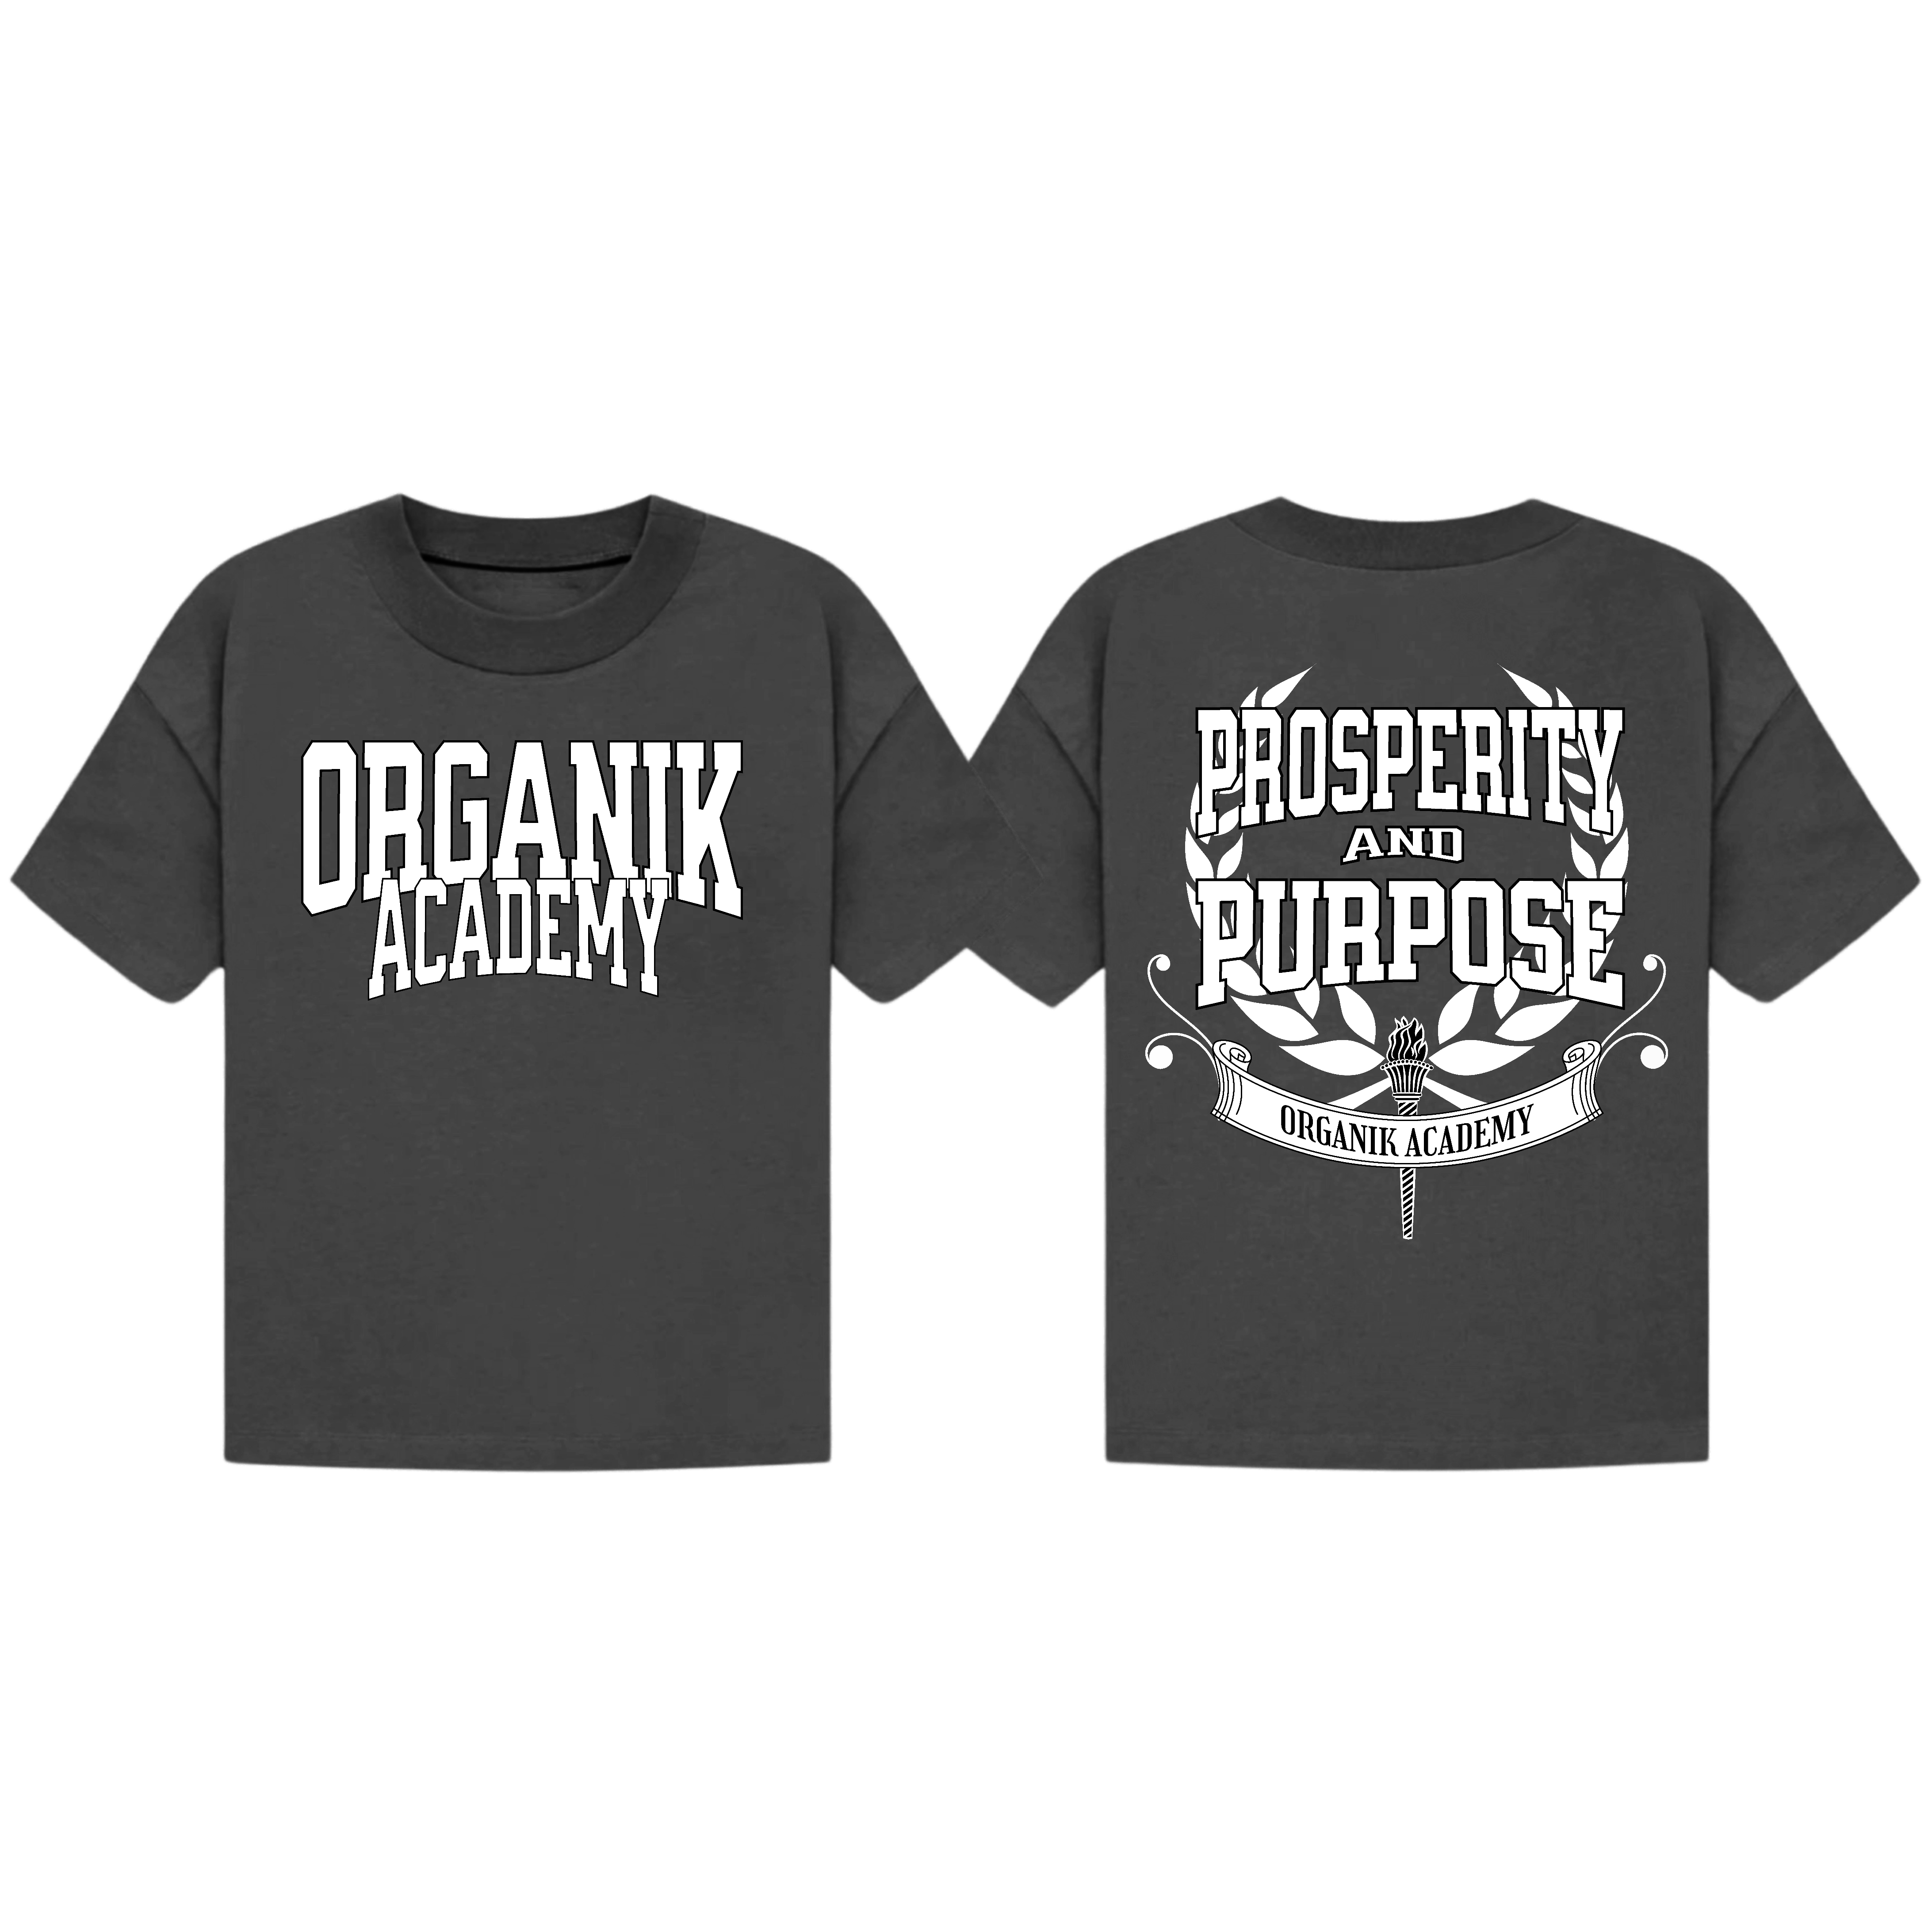 Organik Academy - Prosperity And Purpose T-Shirt